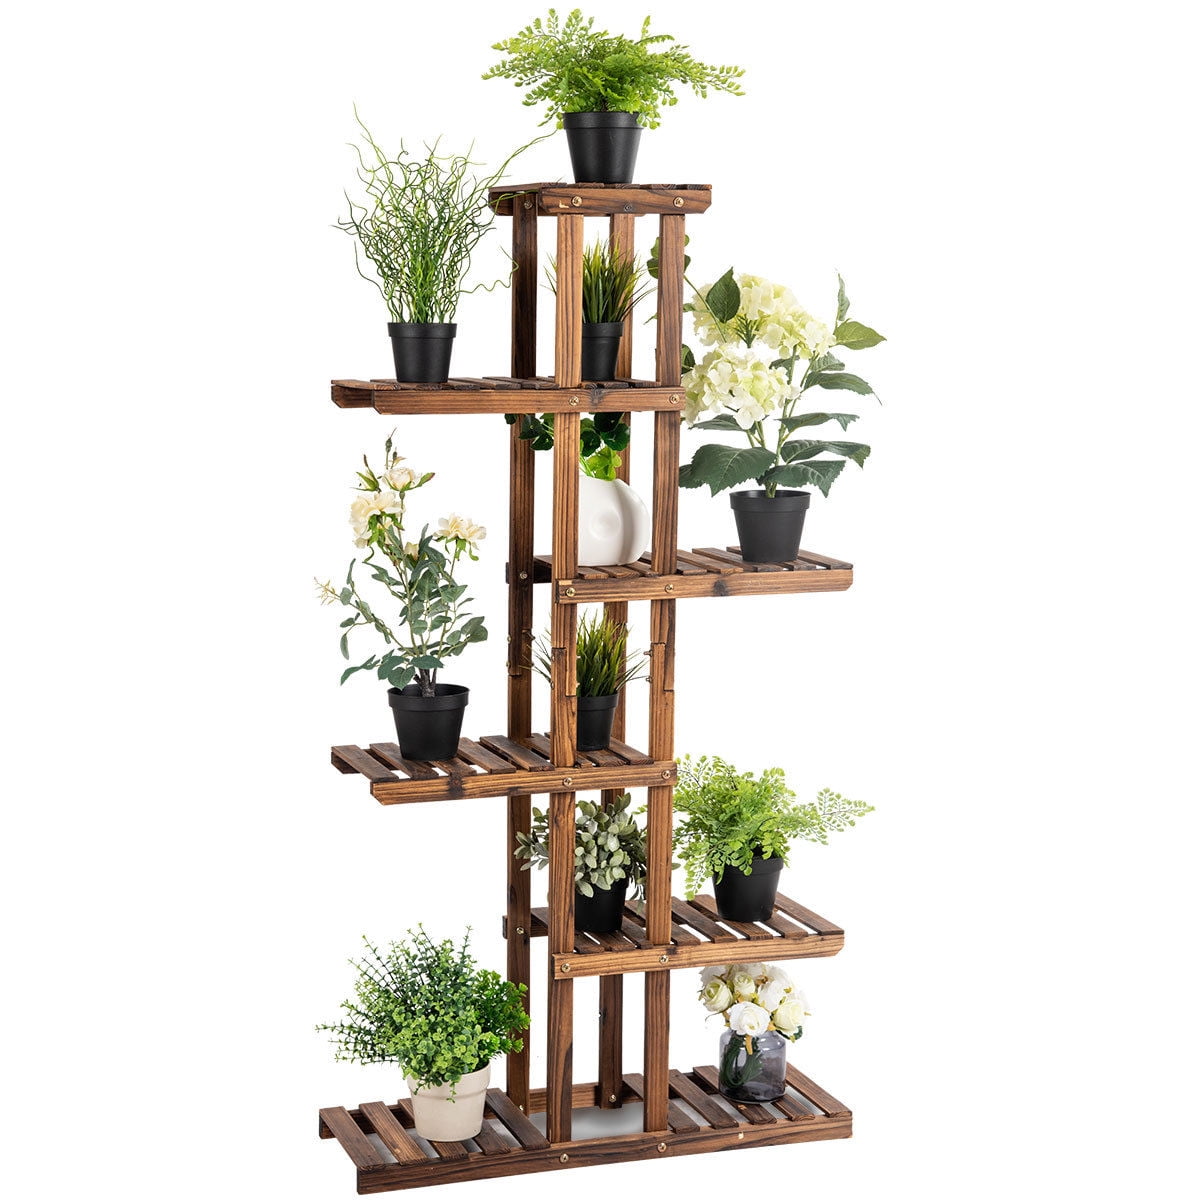 Single Bay Wood Plant Stand Planter Holder Flower Pot Shelf Rack Garden Display